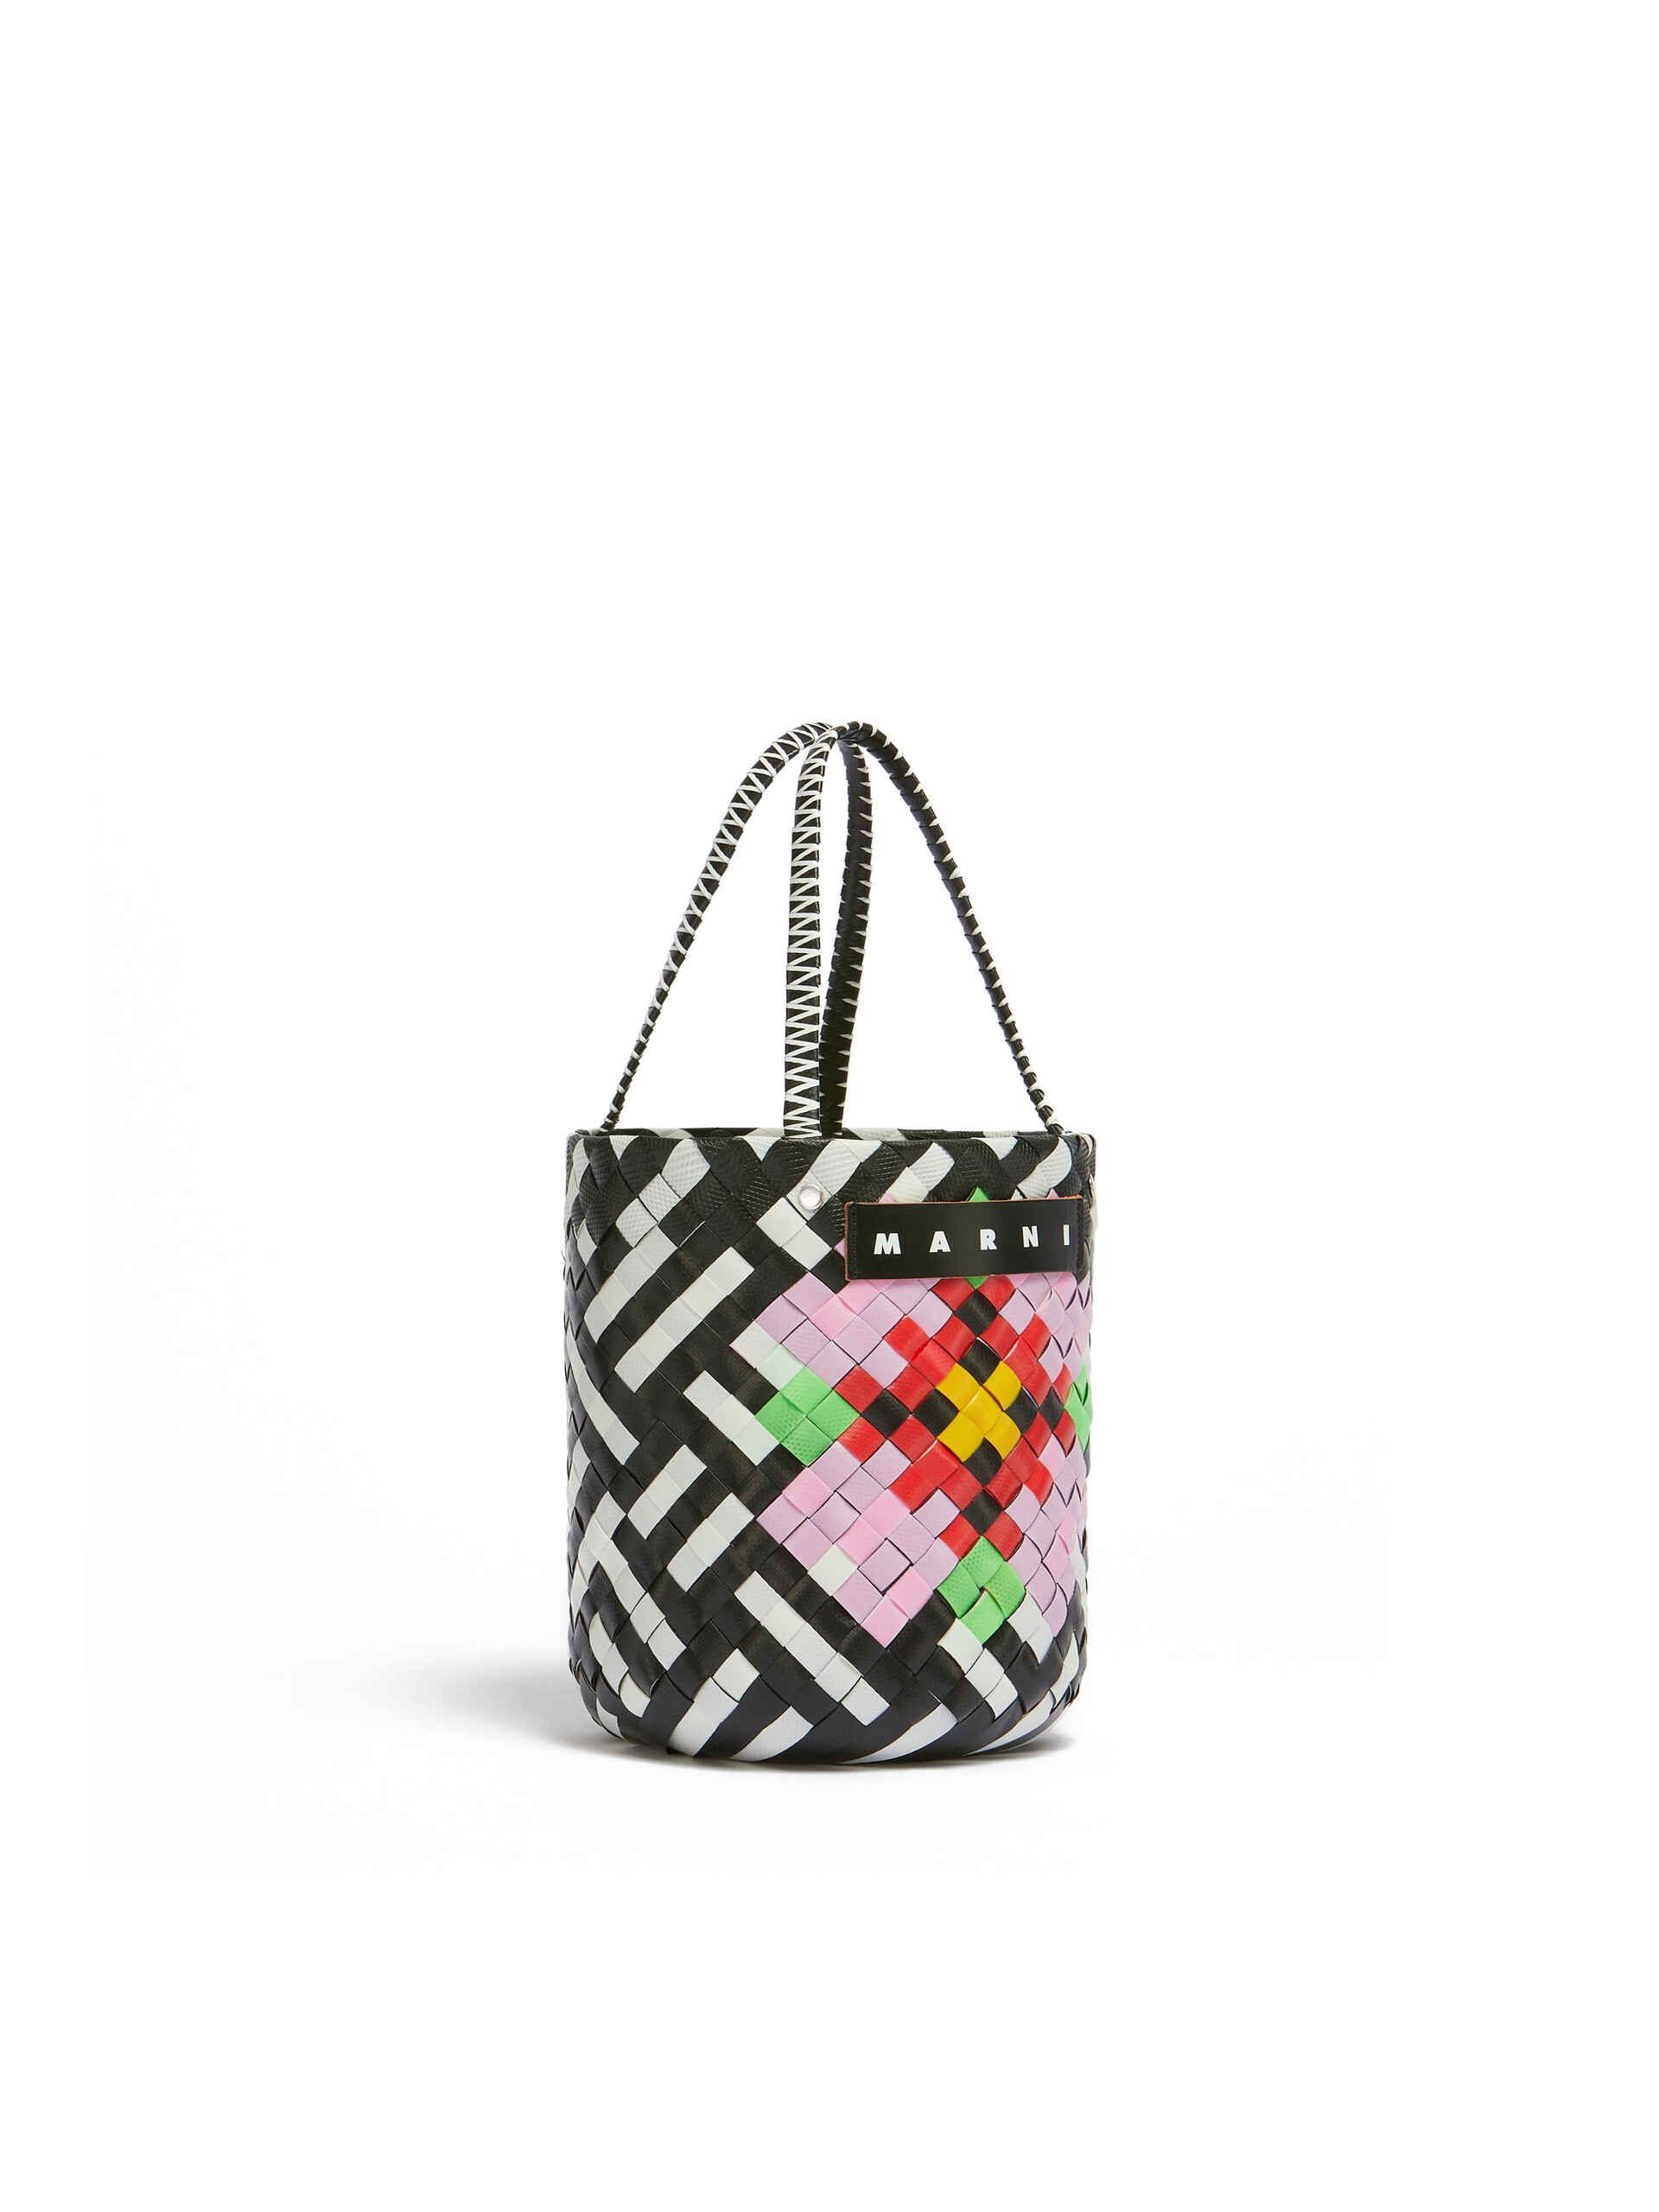 Black and white flower MARNI MARKET BUCKET bag | Marni